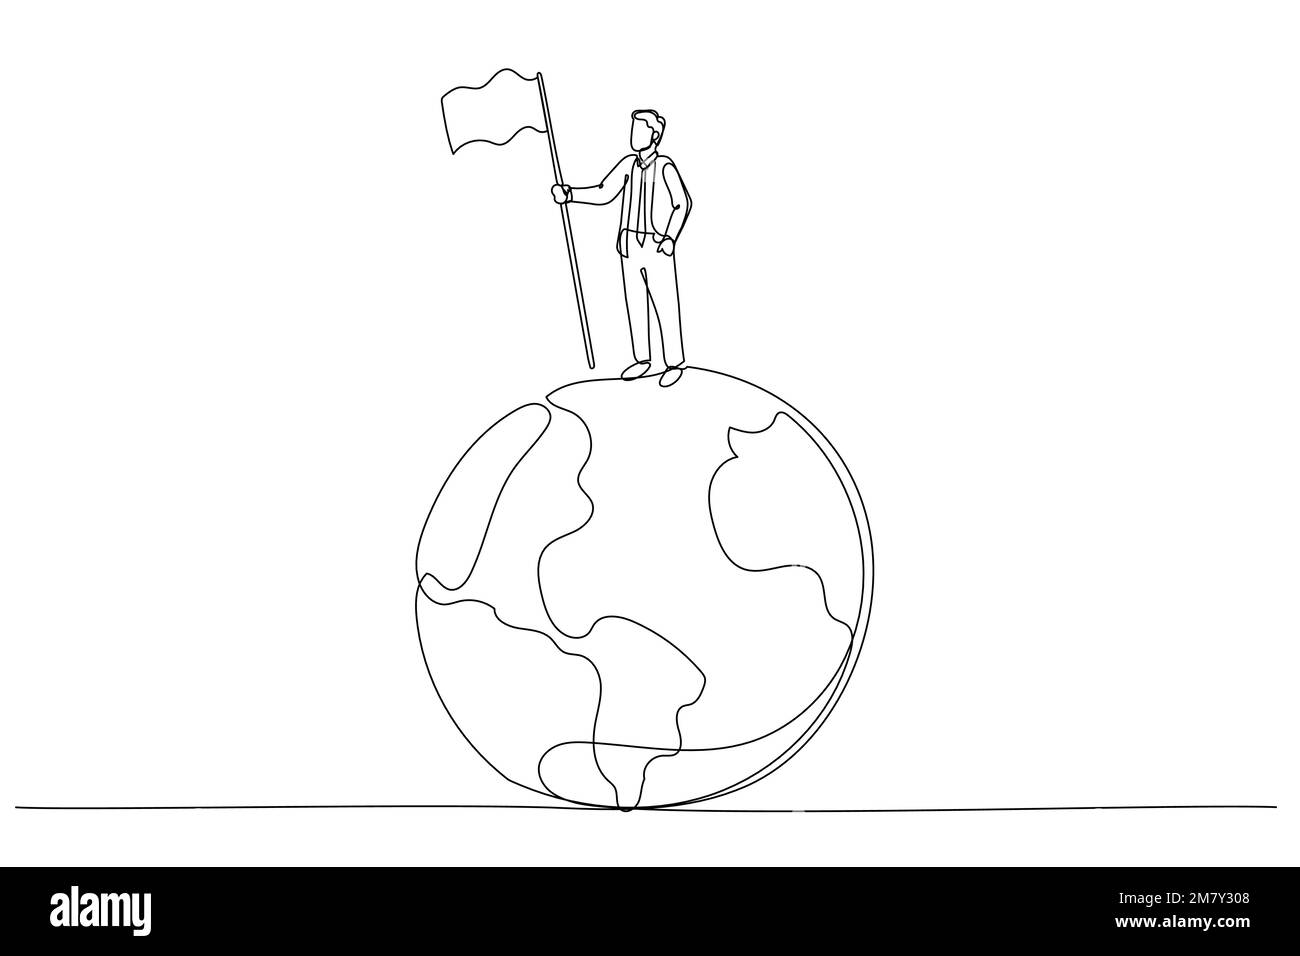 Illustration of businessman climb up ladder holding winning flag on globe winning global business competition. Single line art style design Stock Vector